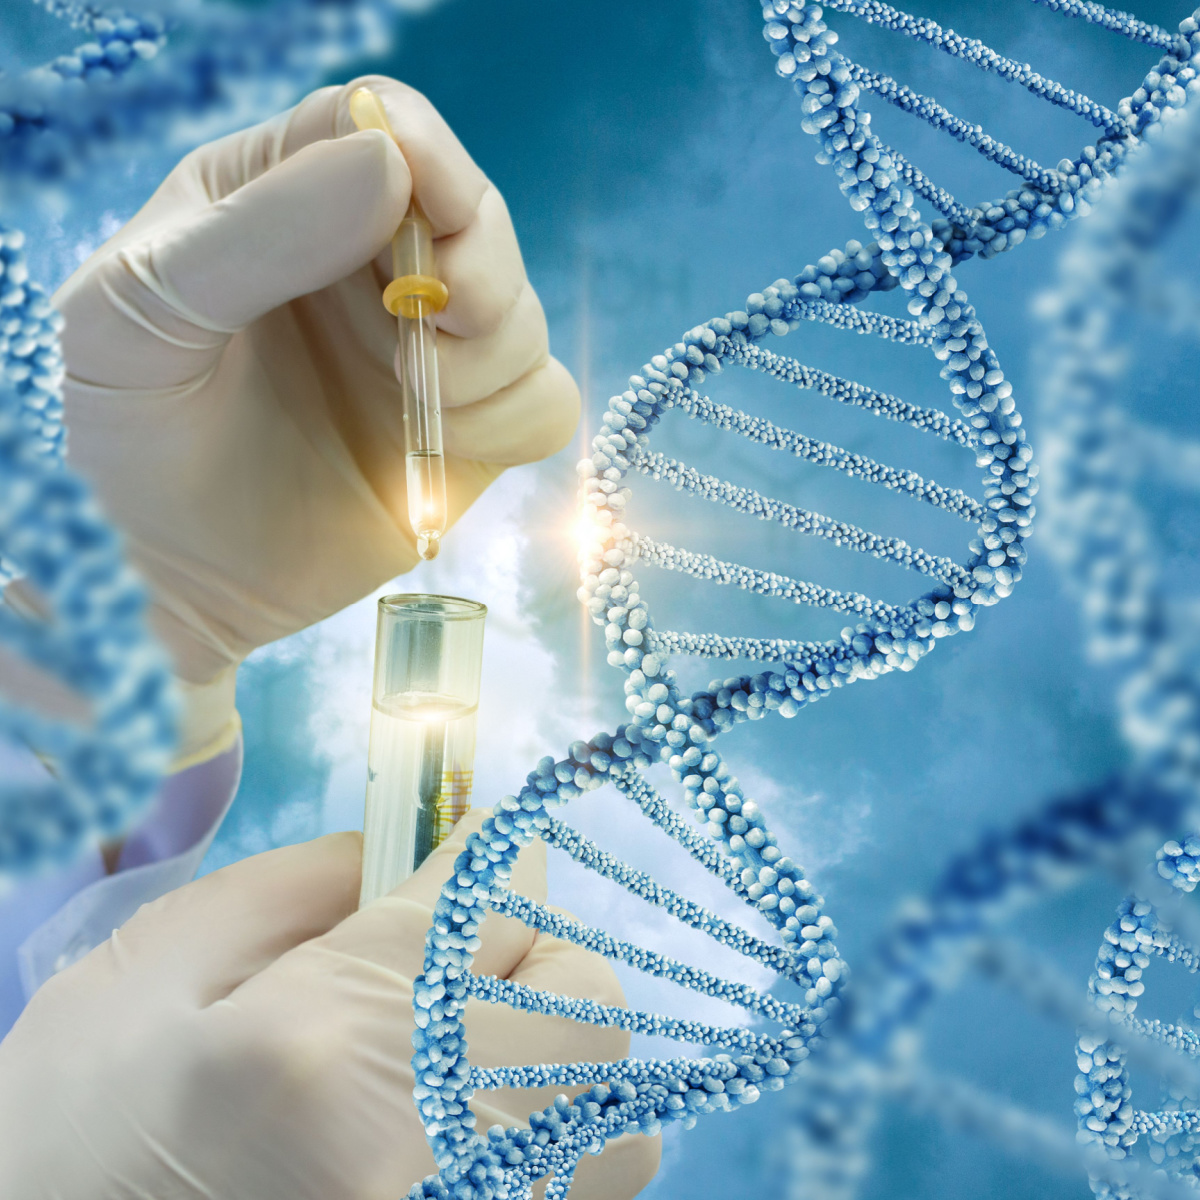 Preimplantation genetic testing